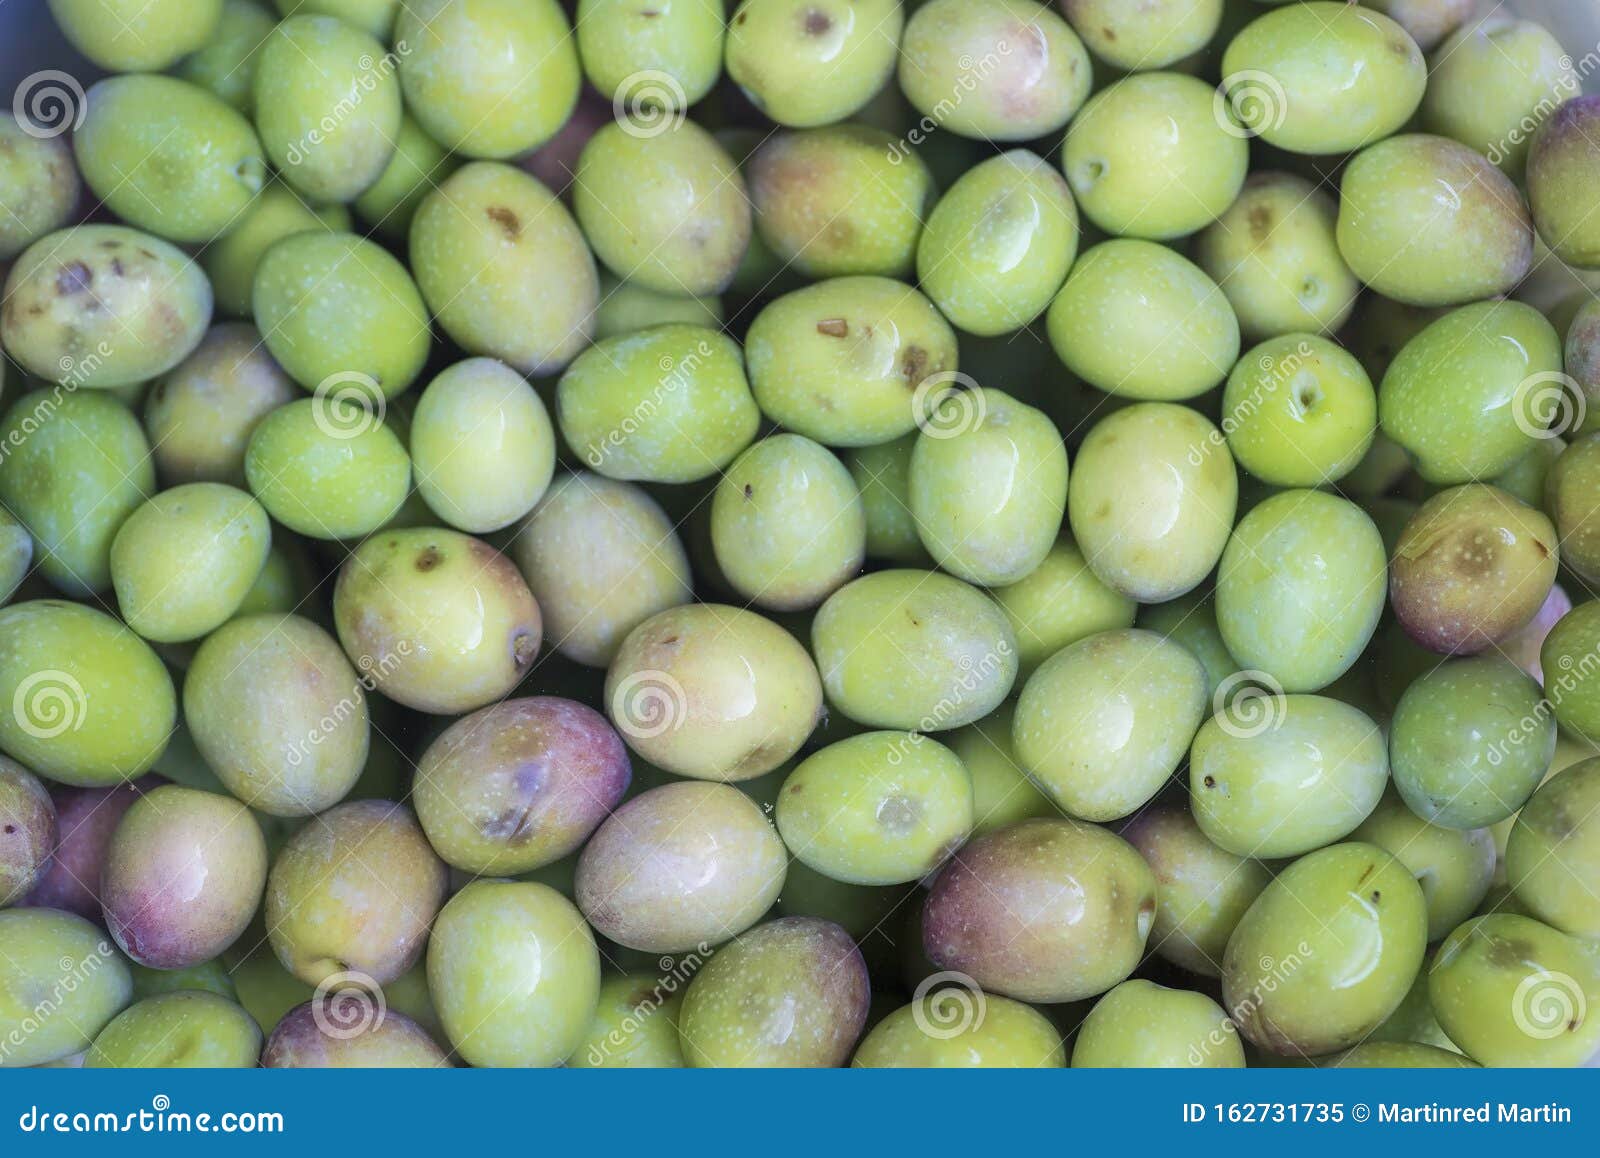 manzanilla cacereÃÂ±a variety olives. olives or olives from extremadura olive trees